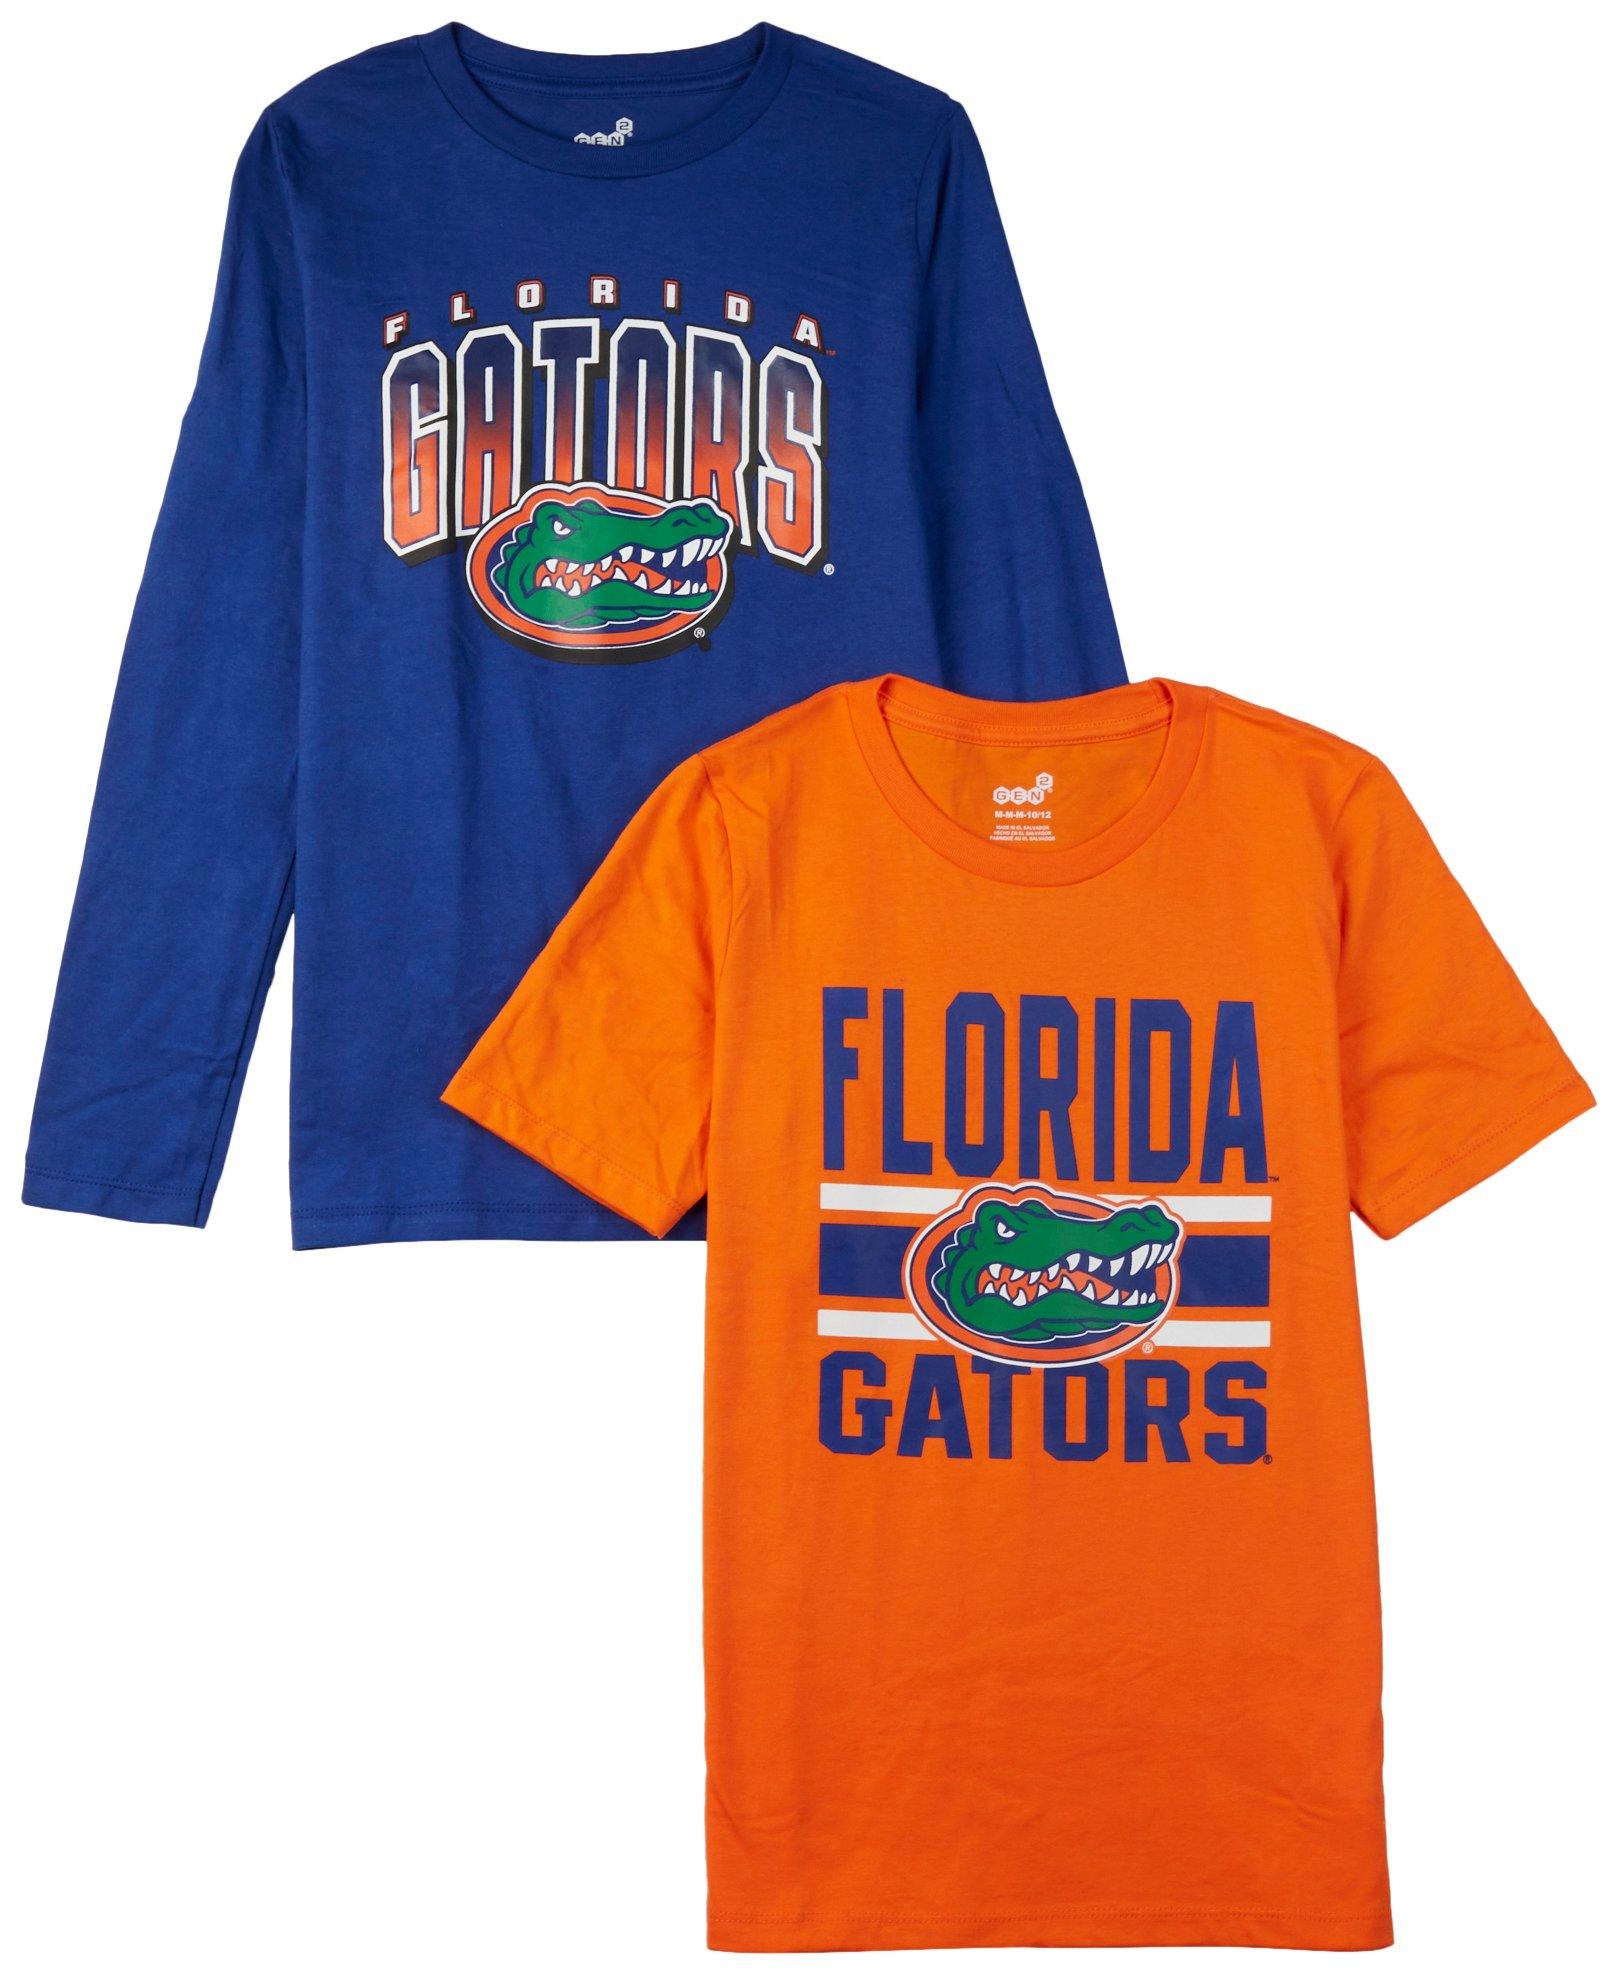 Florida Gators Kids 2-piece Long and Short Sleeve Shirt Set